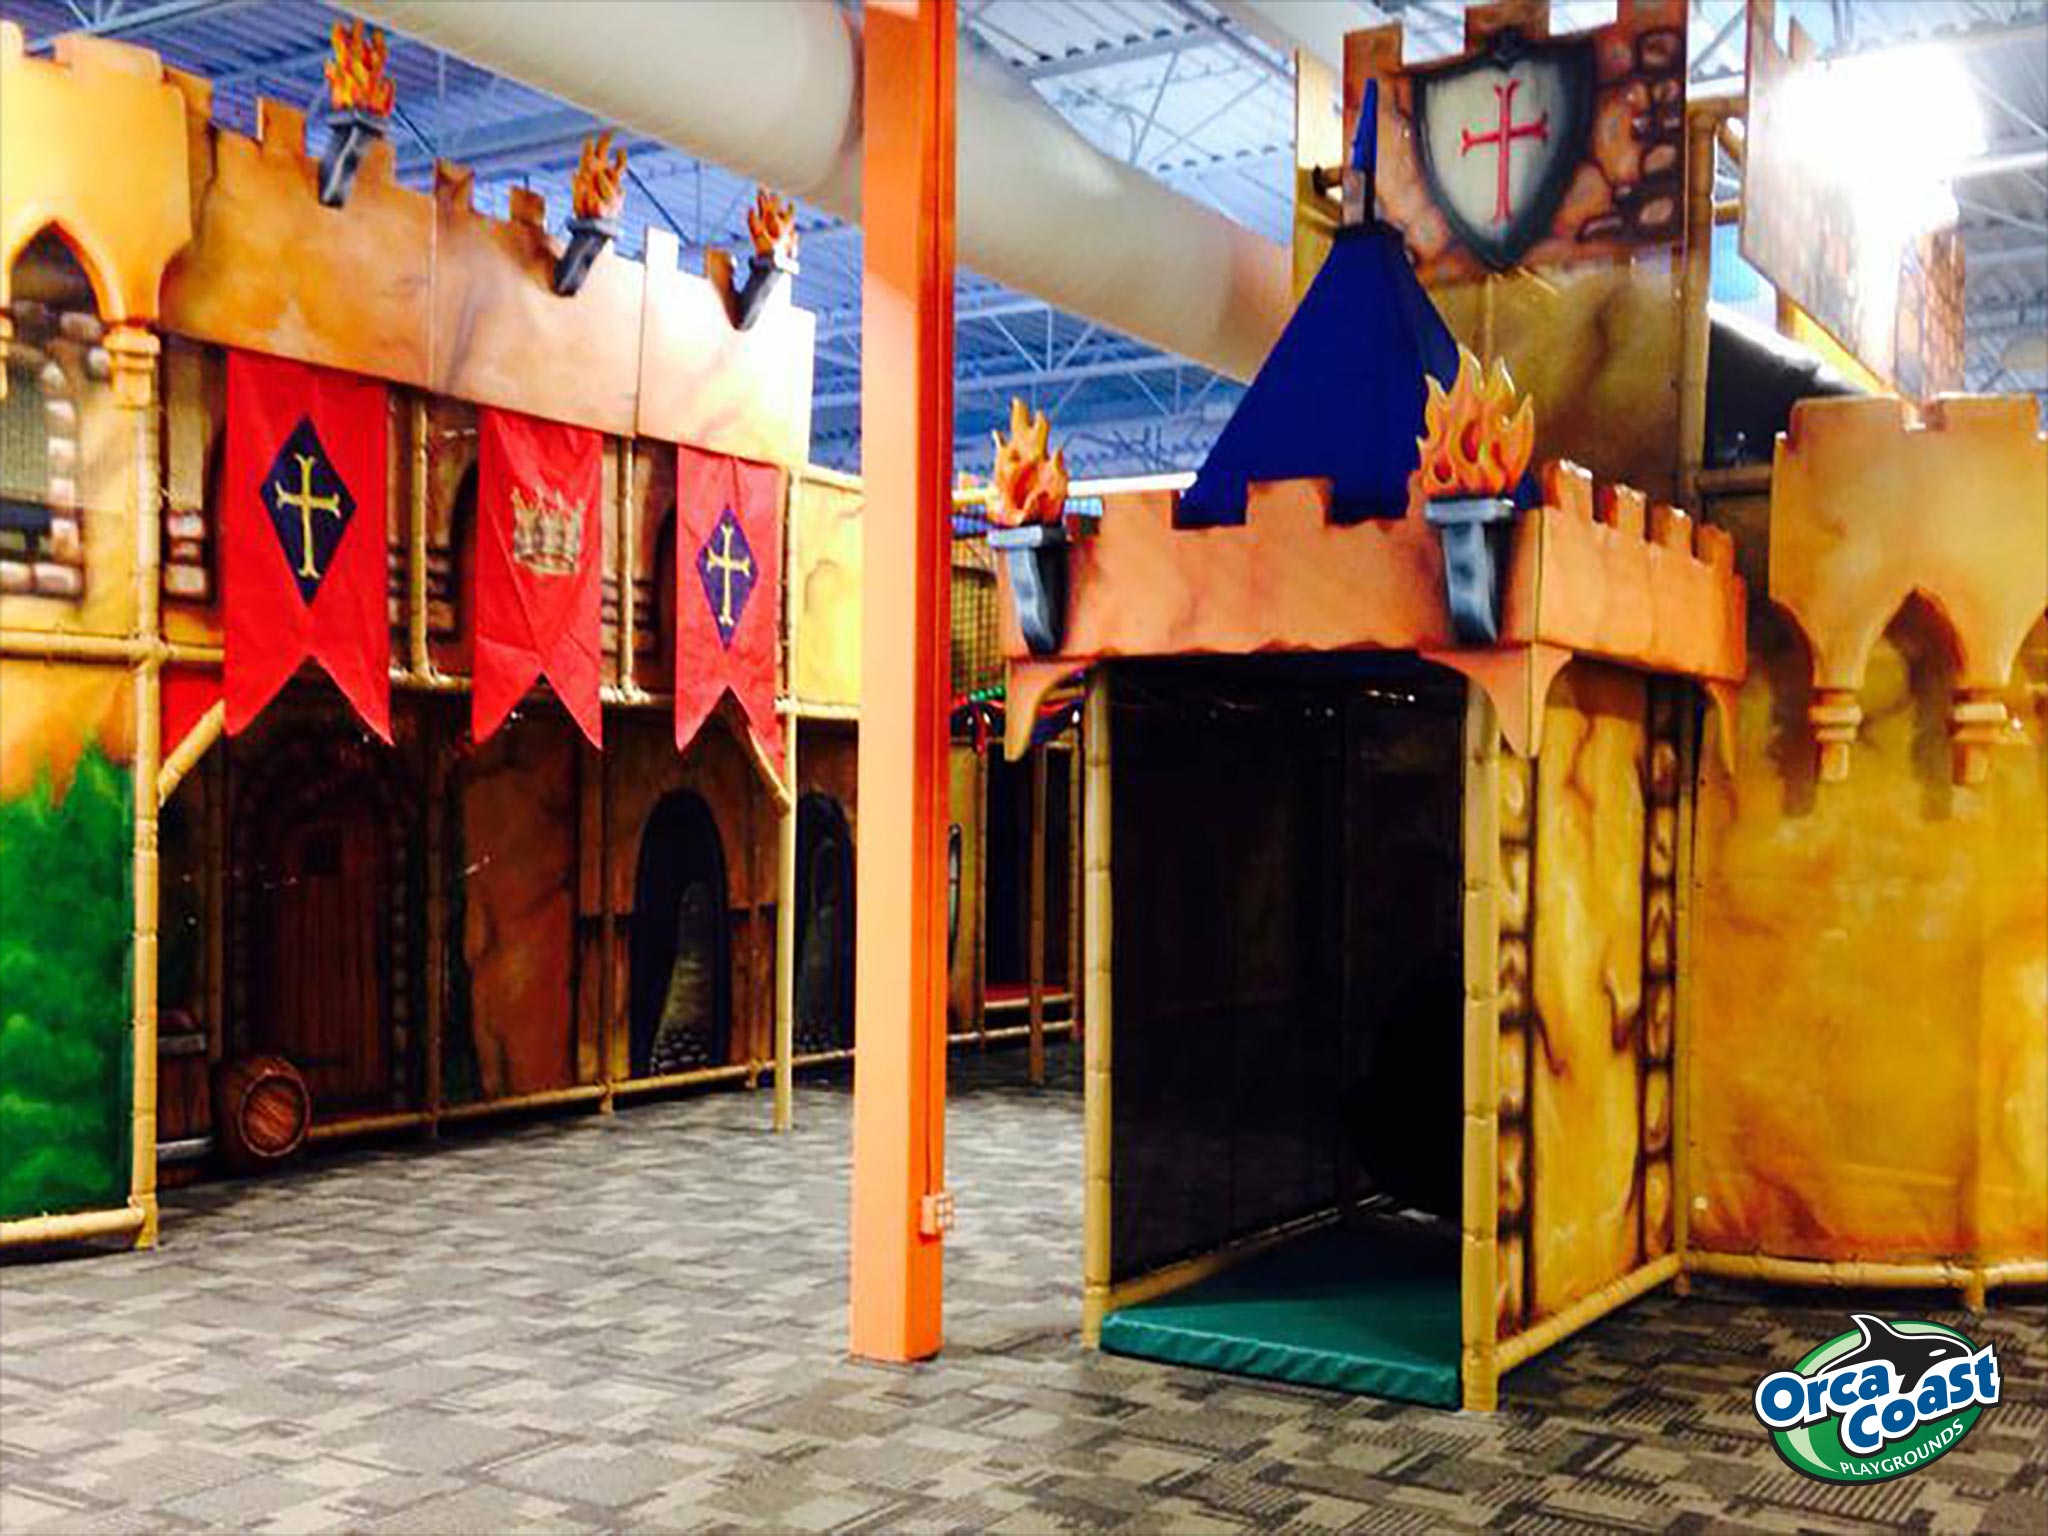 Castle themed indoor playground at Kids Kingdom in Kanata, ON